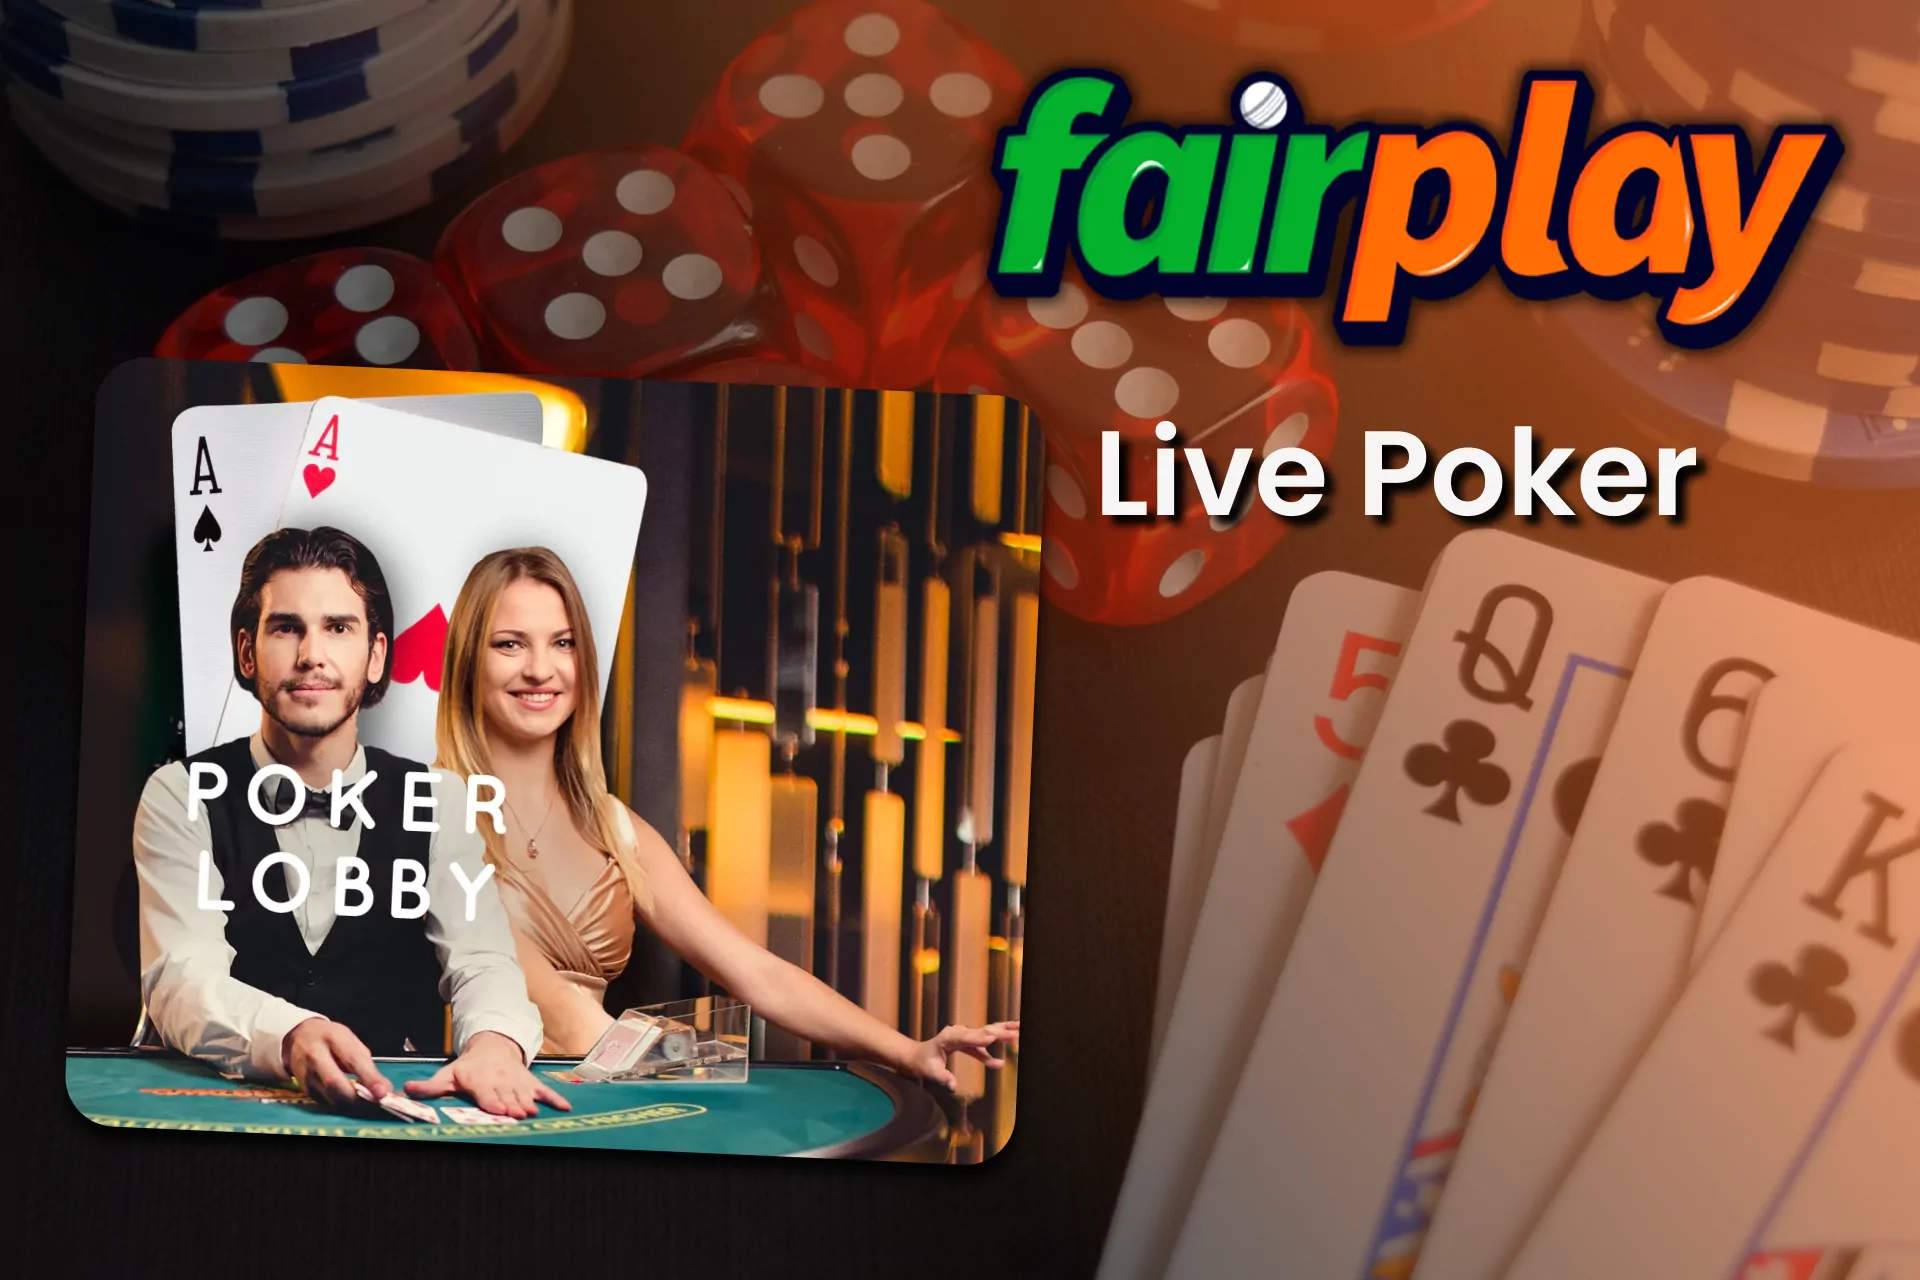 Play Poker on Fairplay.